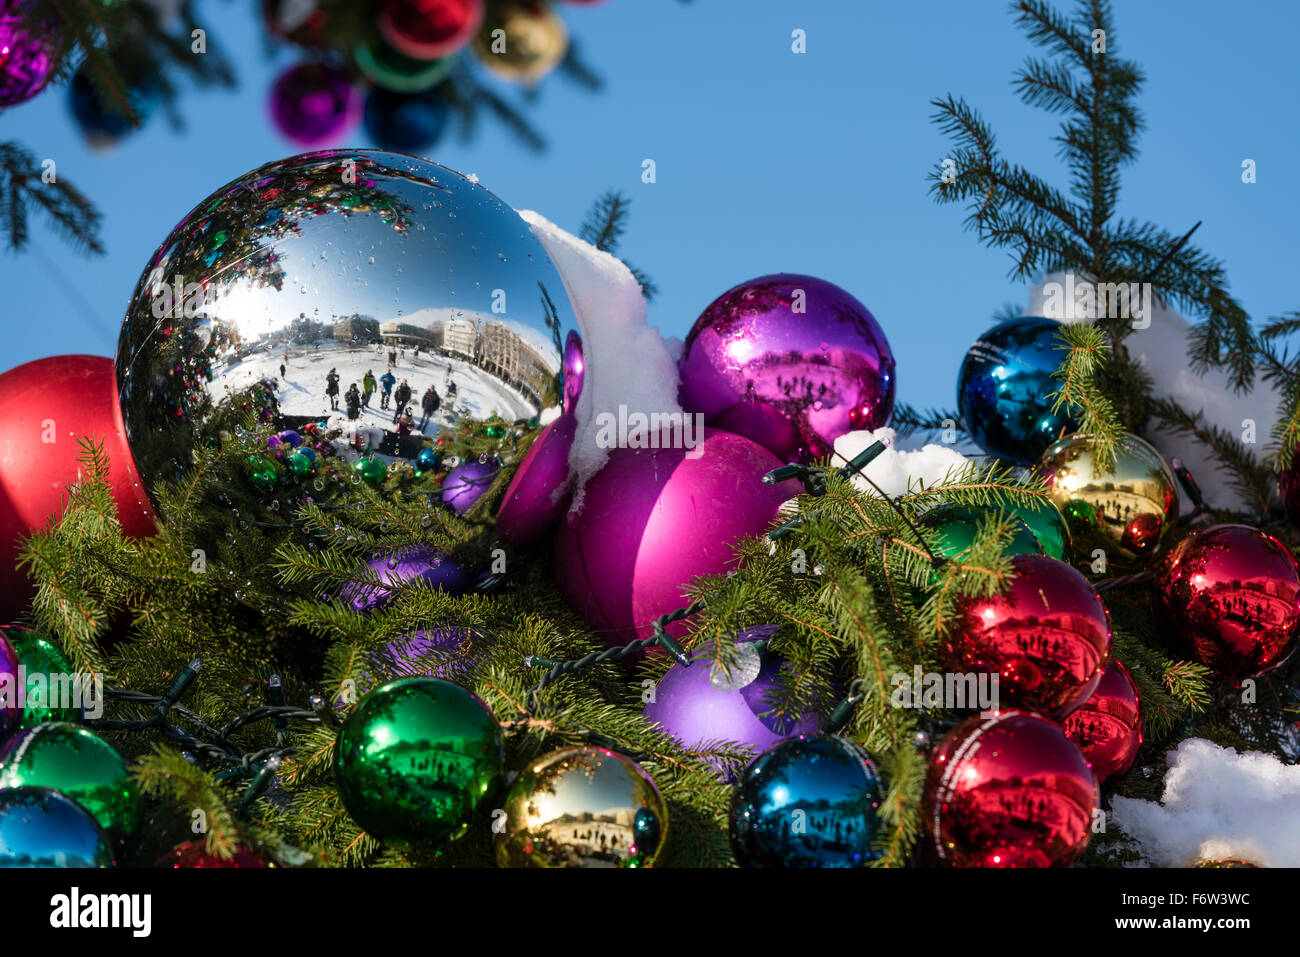 Esferas navideñas gigantes  Christmas light ornament, Christmas